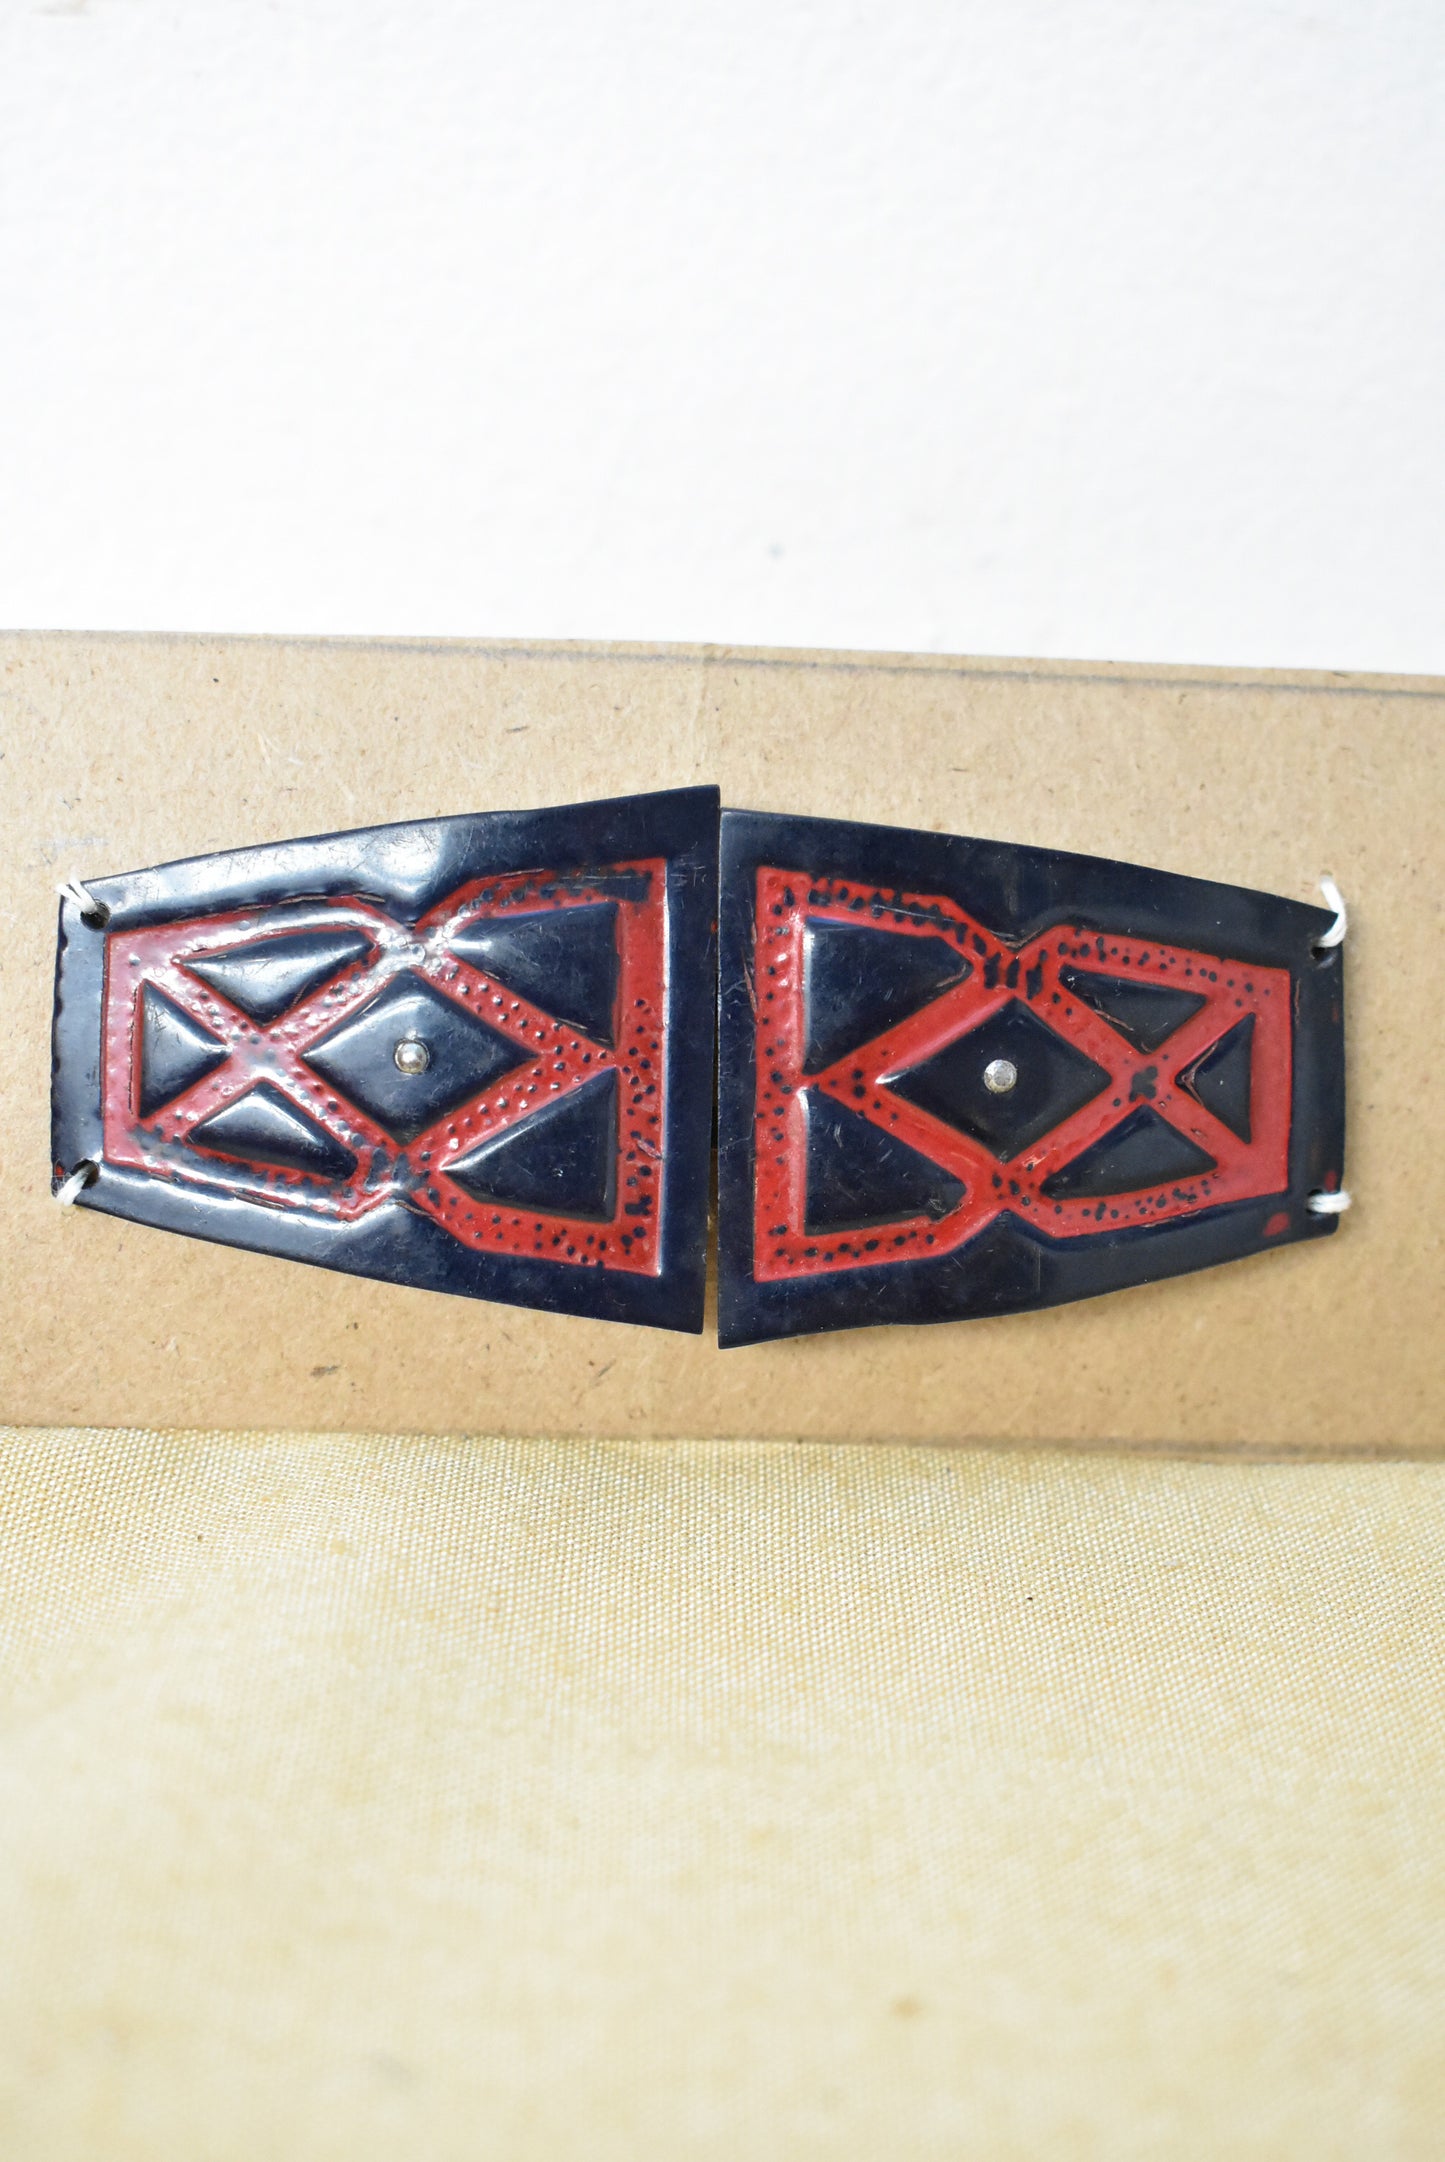 Retro red & blue/black belt buckles